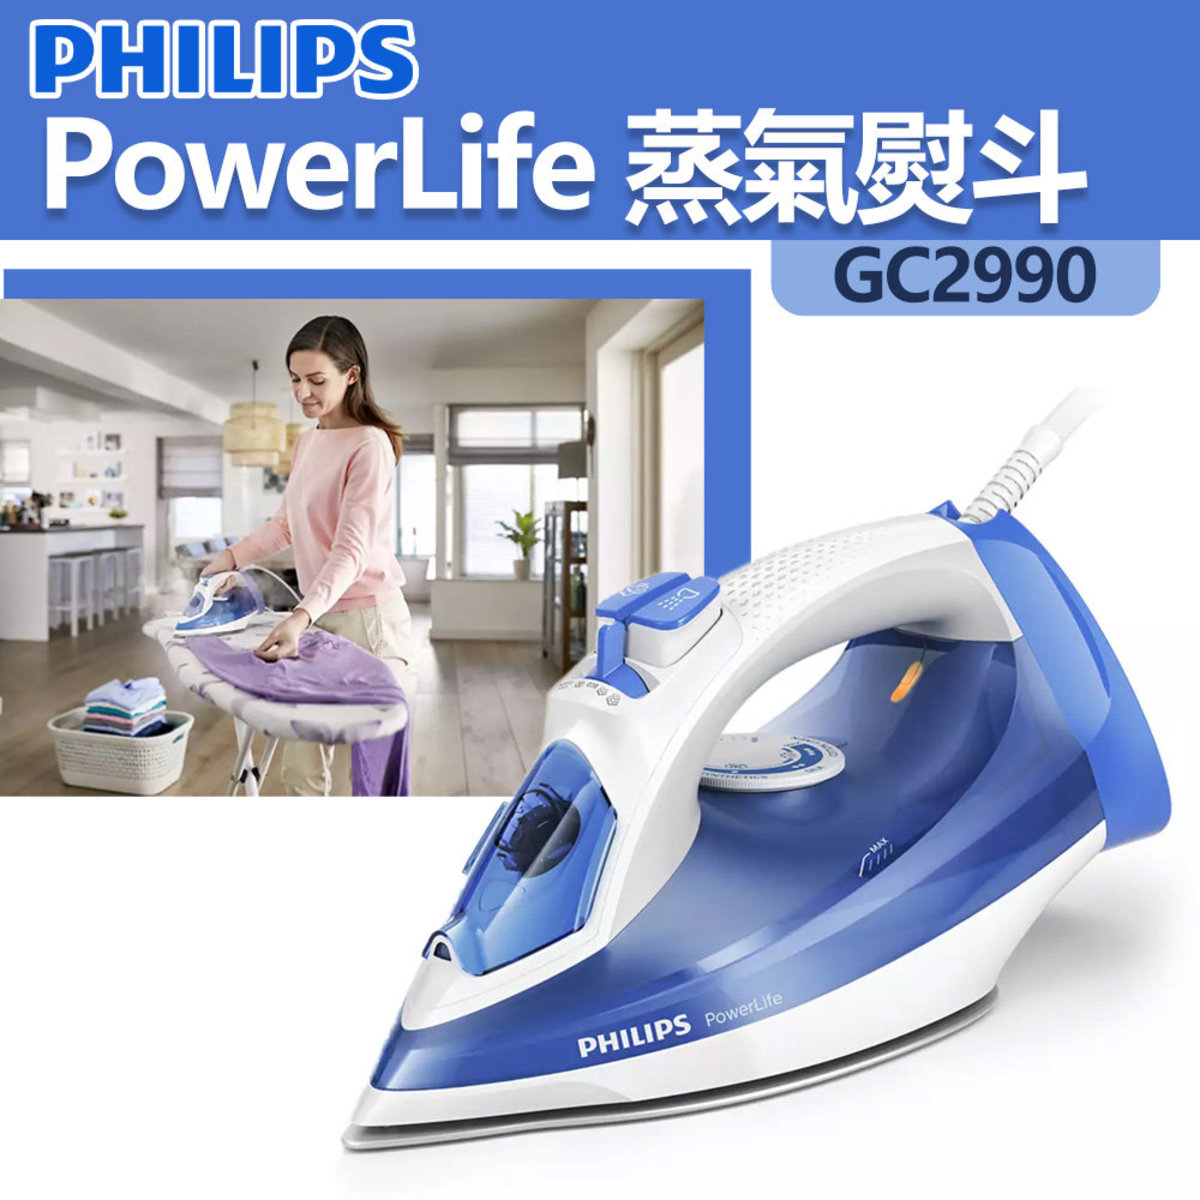 Philips | PowerLife iron GC2990 | HKTVmall The Largest HK Shopping Platform